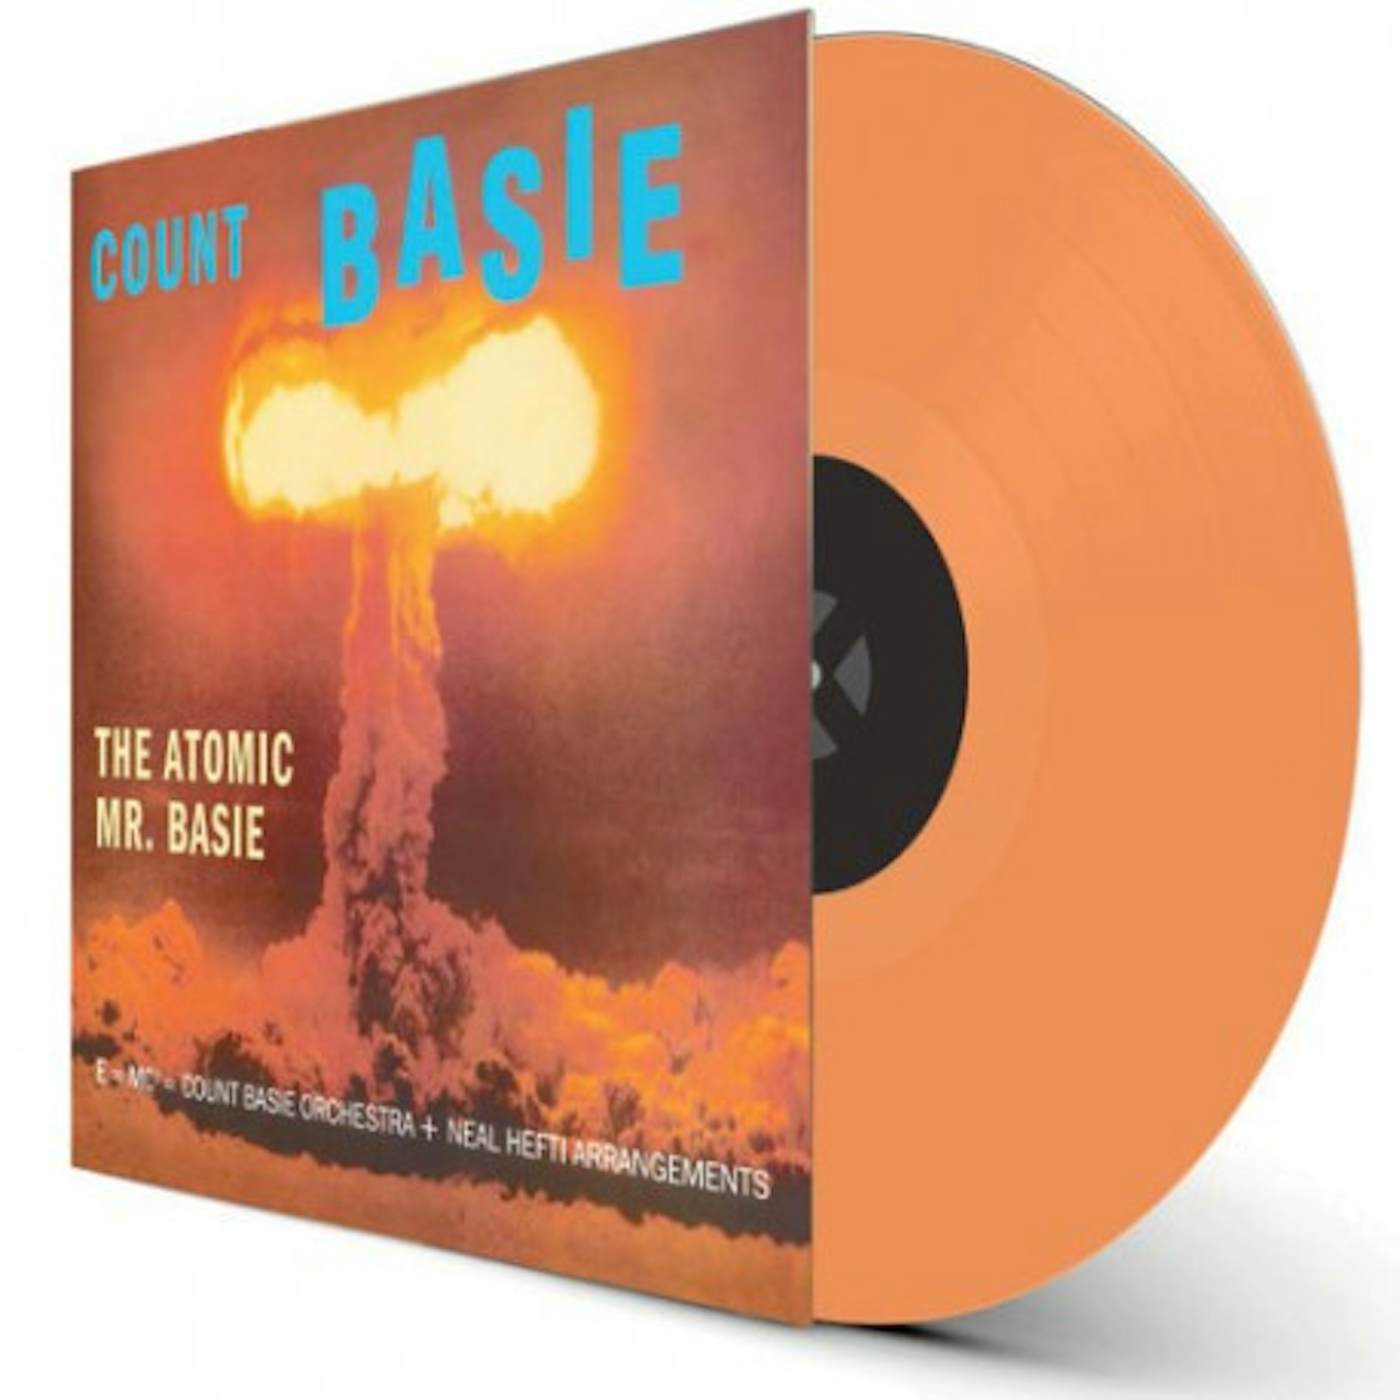 Count Basie ATOMIC MR BASIE Vinyl Record - Colored Vinyl, 180 Gram Pressing, Orange Vinyl, Spain Release